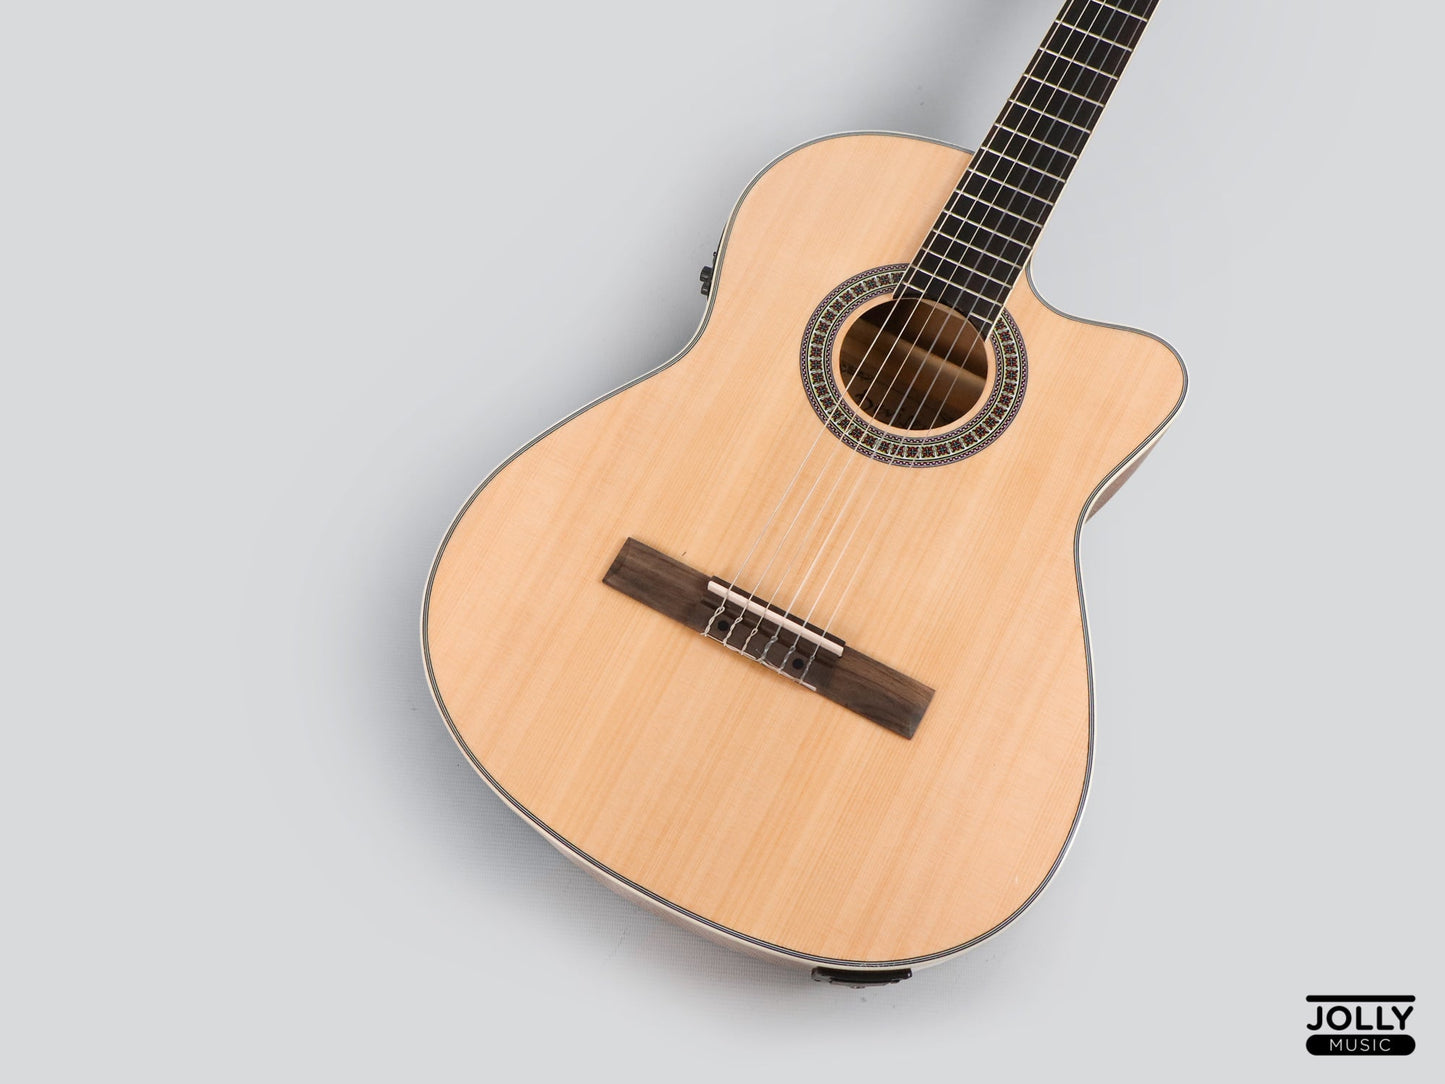 Deviser L-330-39-N EQ Classical Guitar (Natural) with Pickup